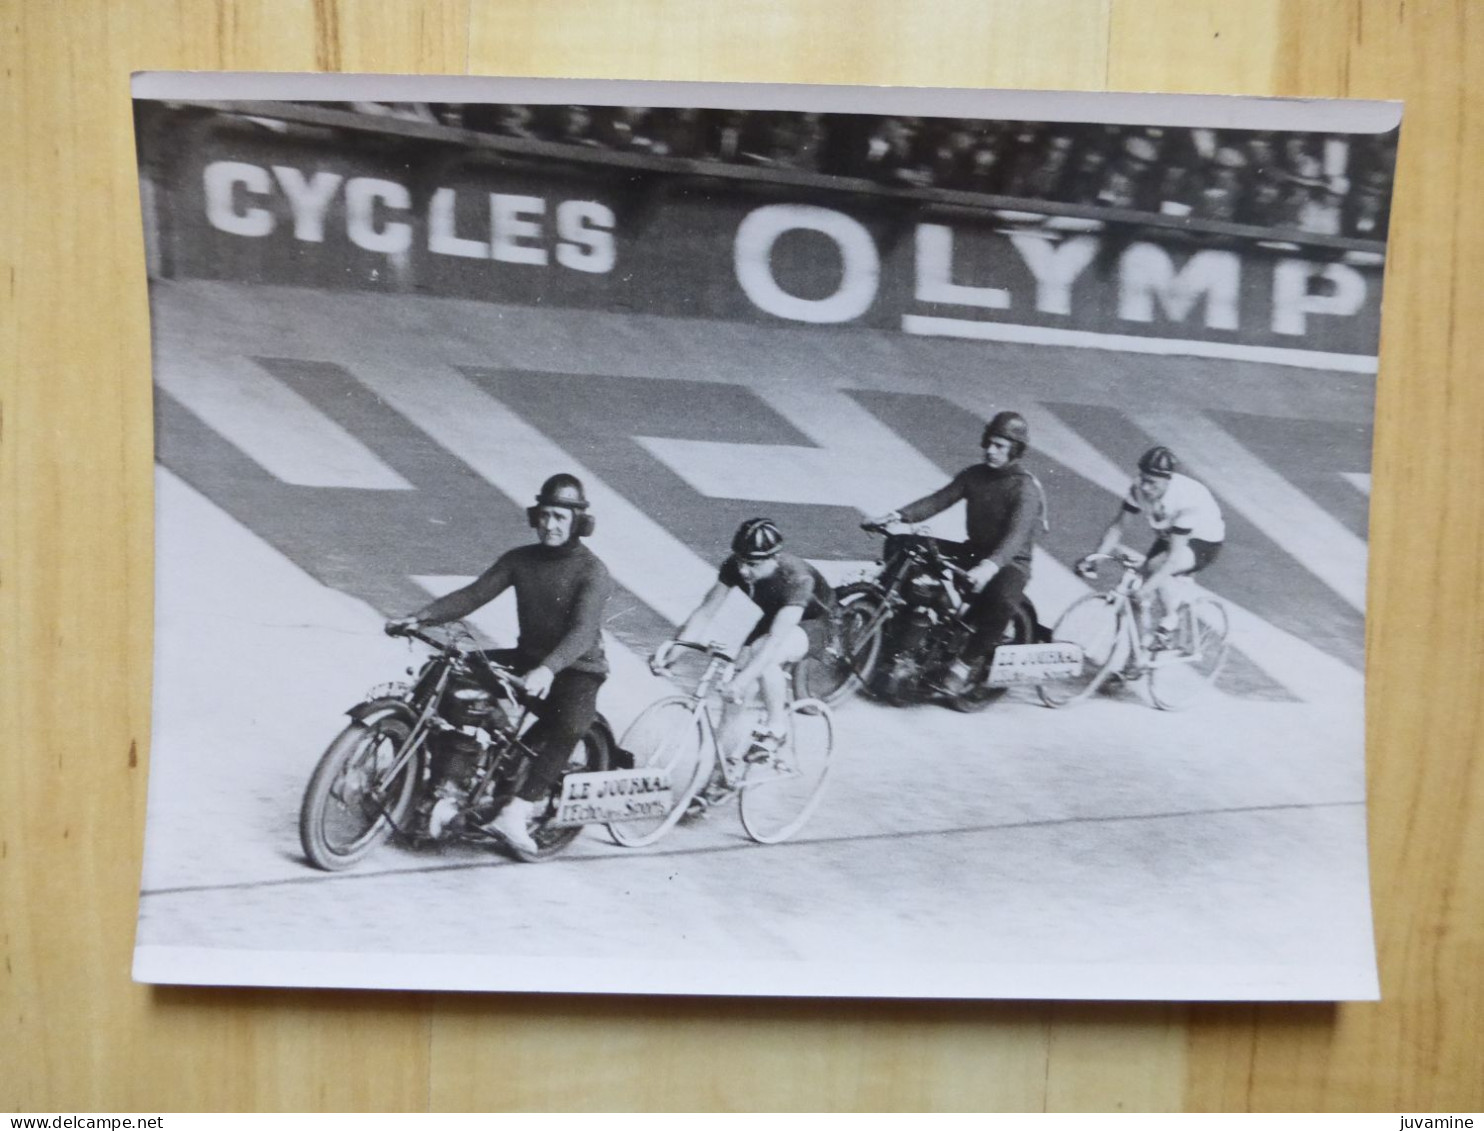 STADE BUFFALO 1934  - SELECTION CRITERIUM DES AS - L'ALLEMAND EHMER DOUBLE FAUDET - PHOTOGRAPHIE CYCLISME CYCLISTE SPORT - Wielrennen